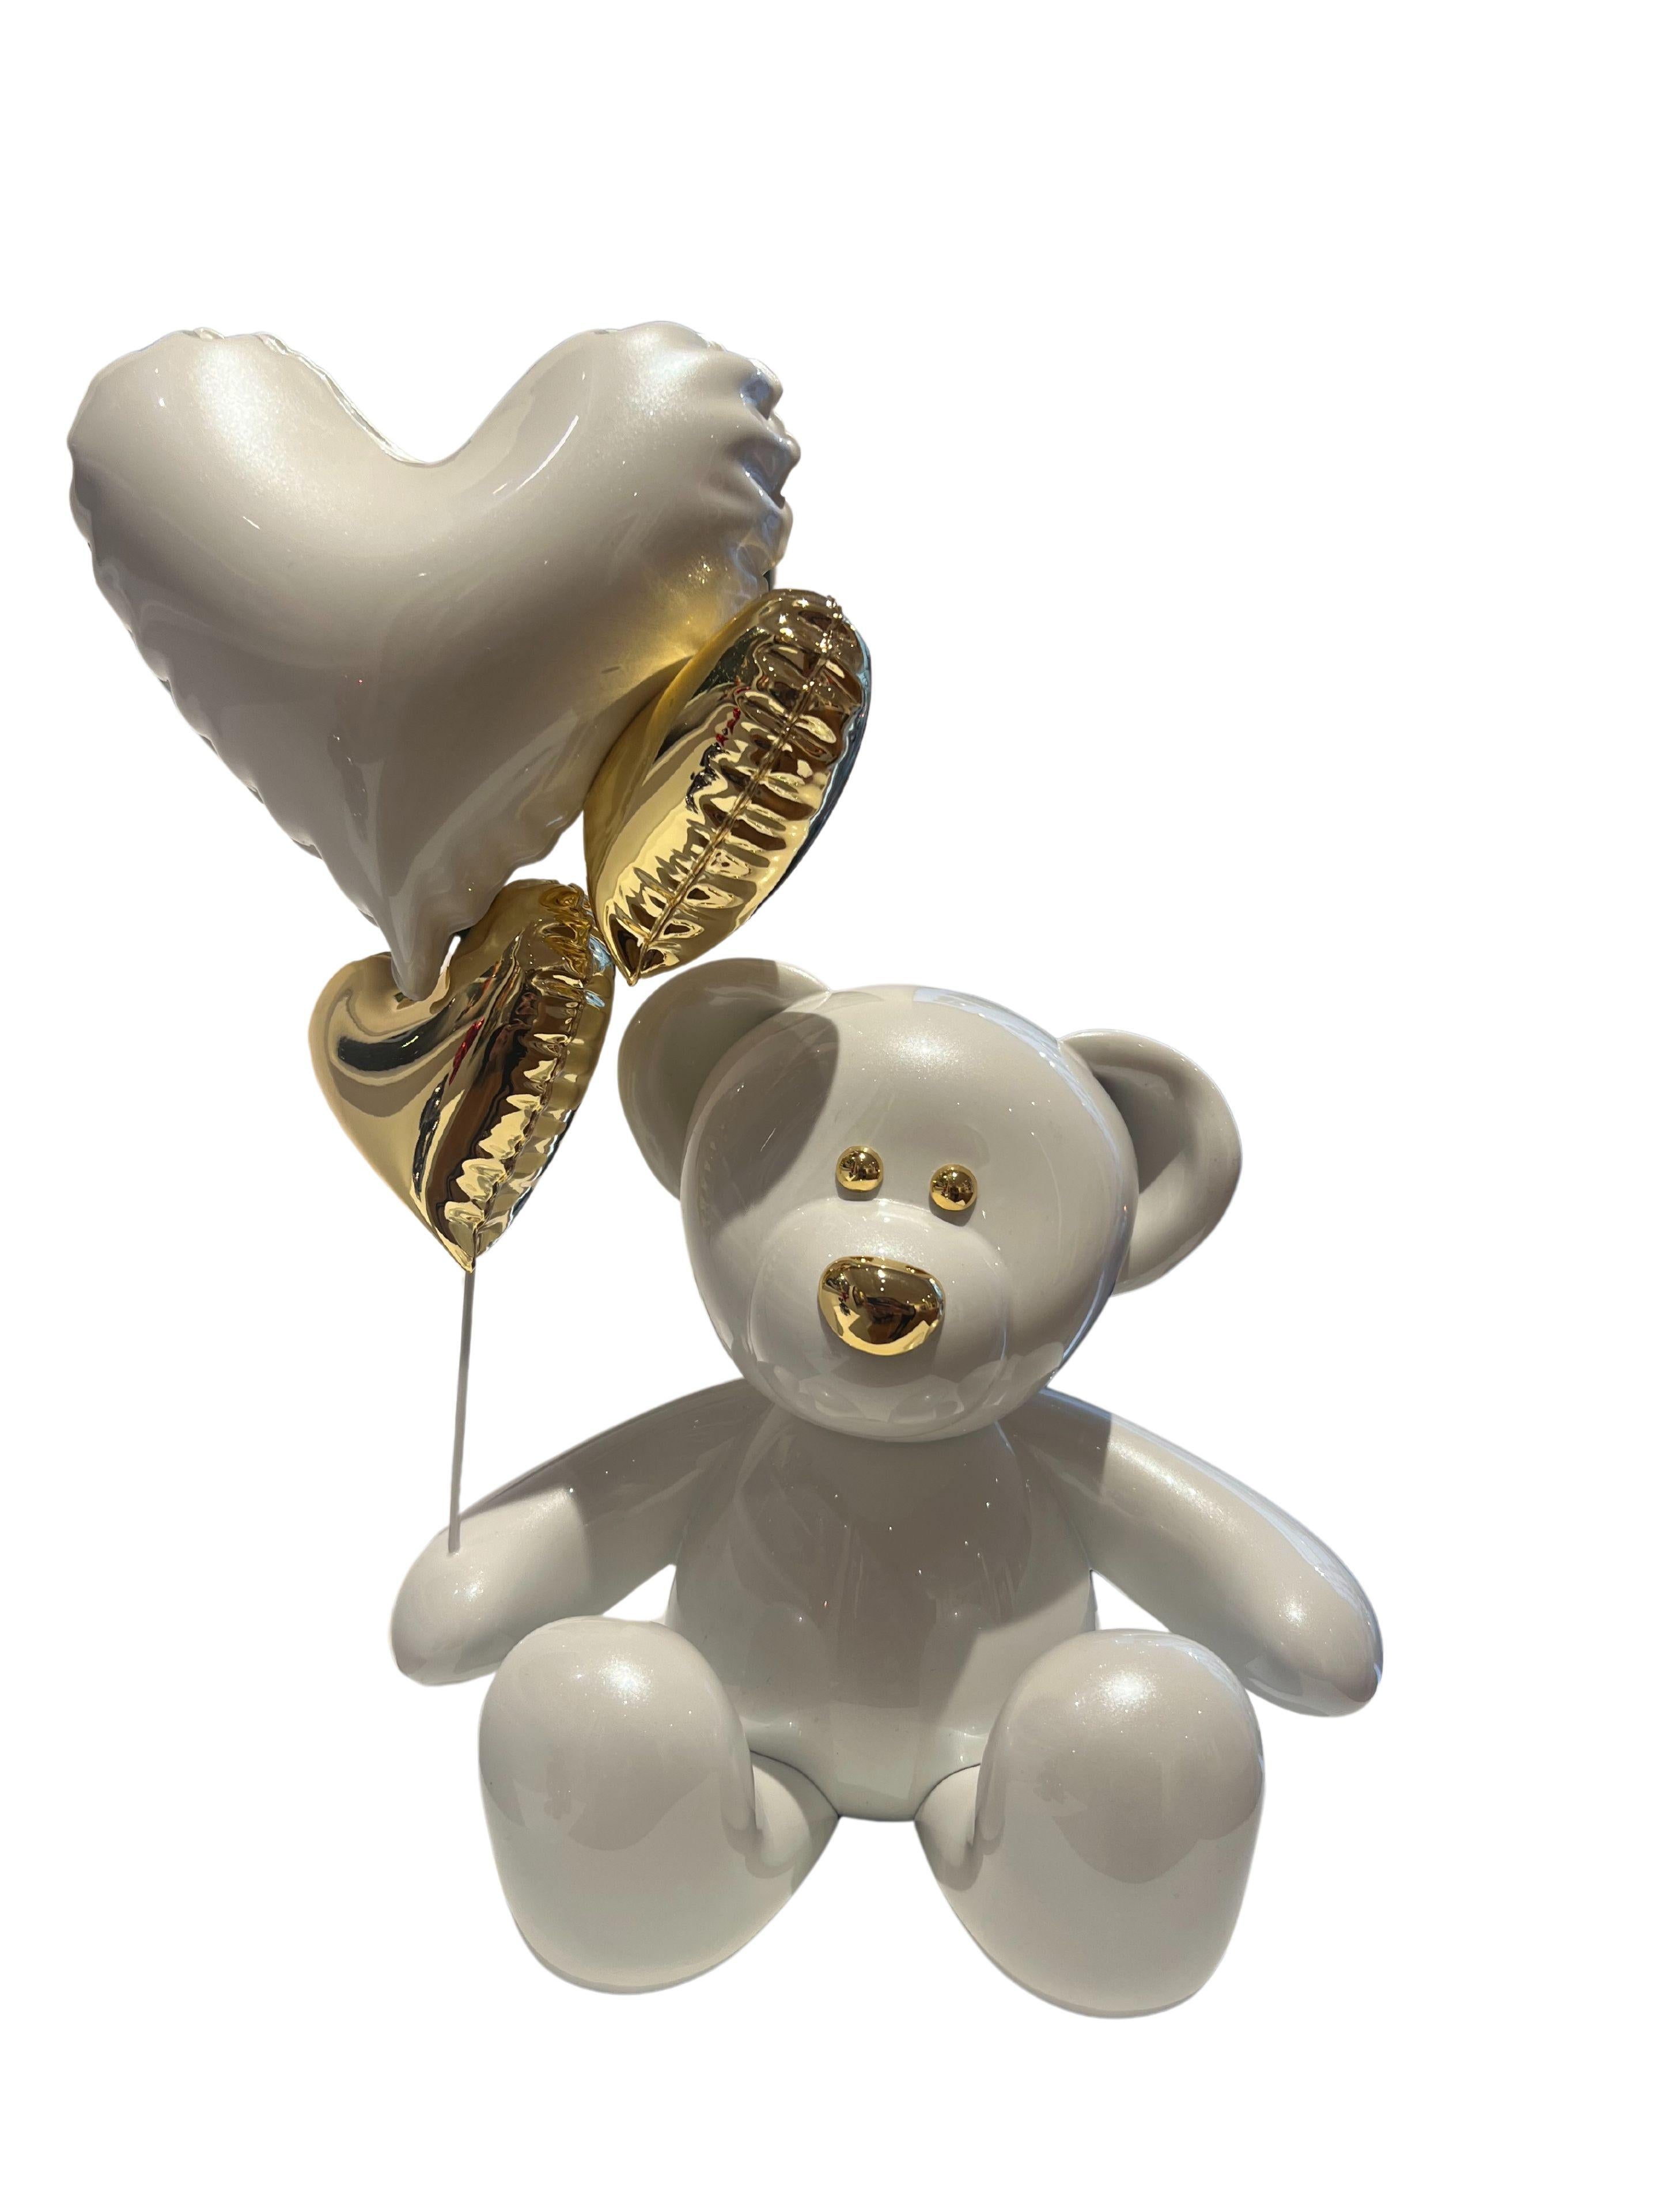 Nicolas Krauss Figurative Sculpture - Teddy Love - Pearl White & Gold